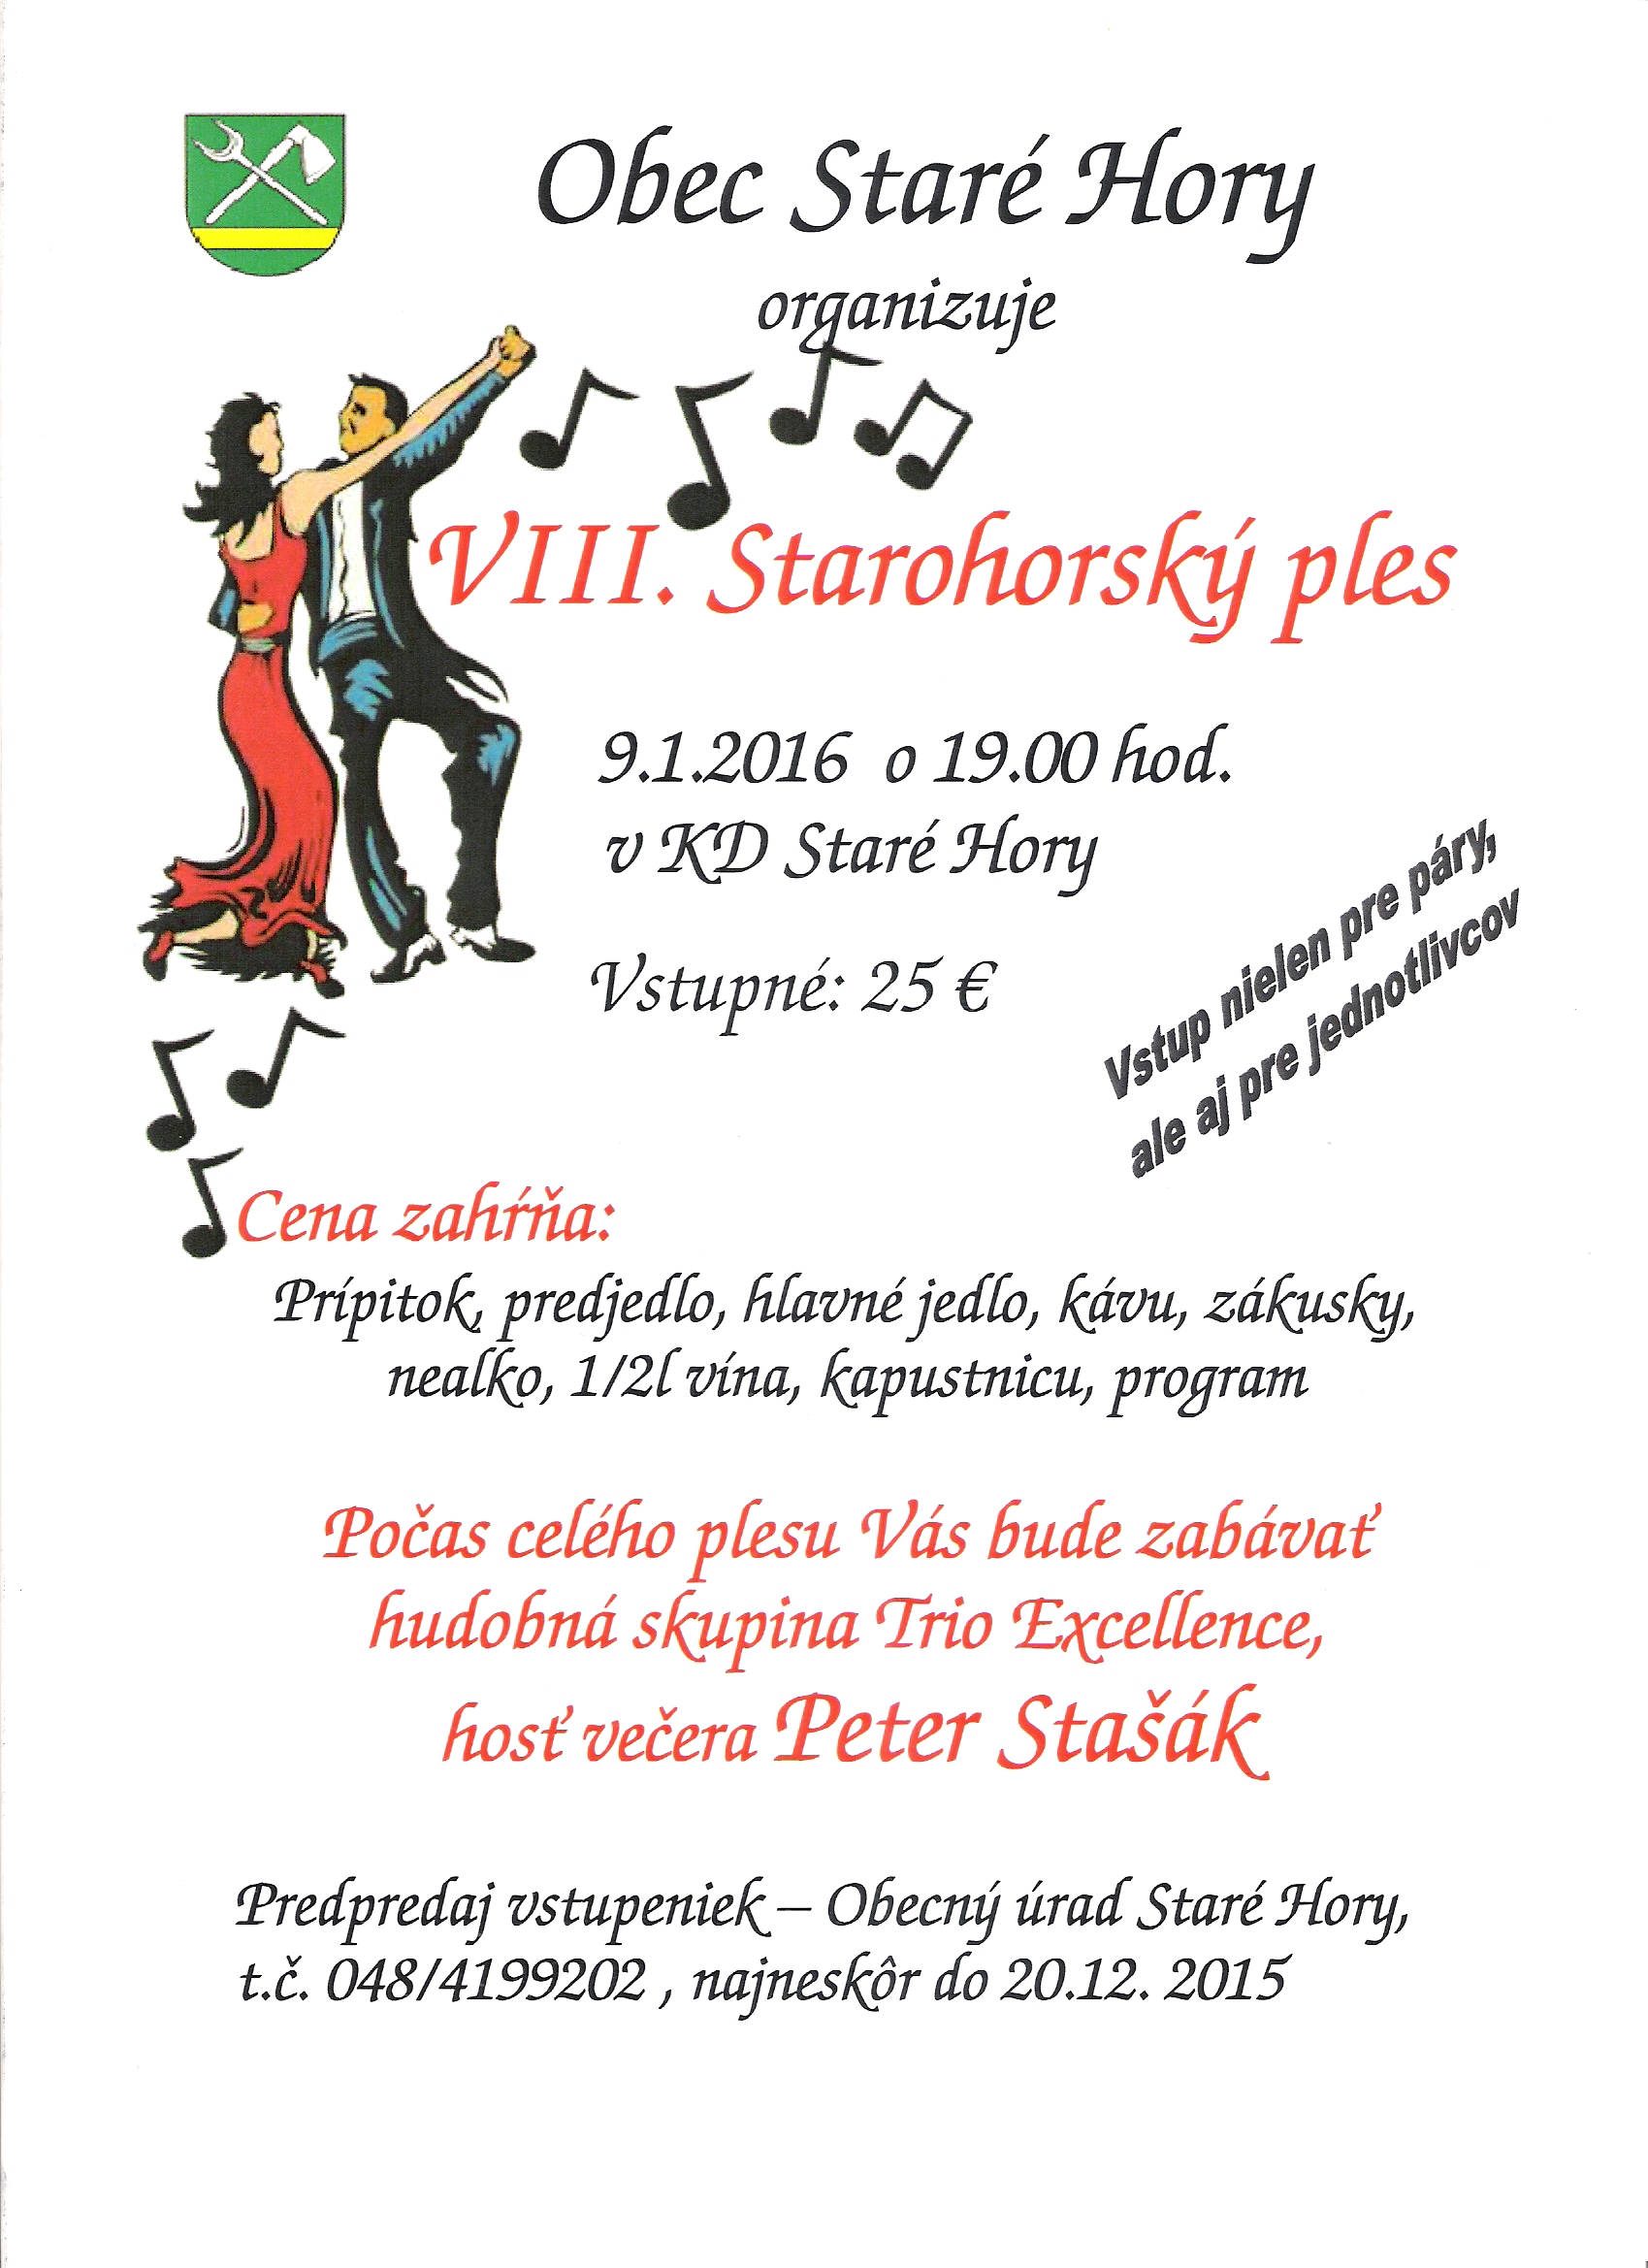 VIII. Starohorsk ples 2016 Star Hory